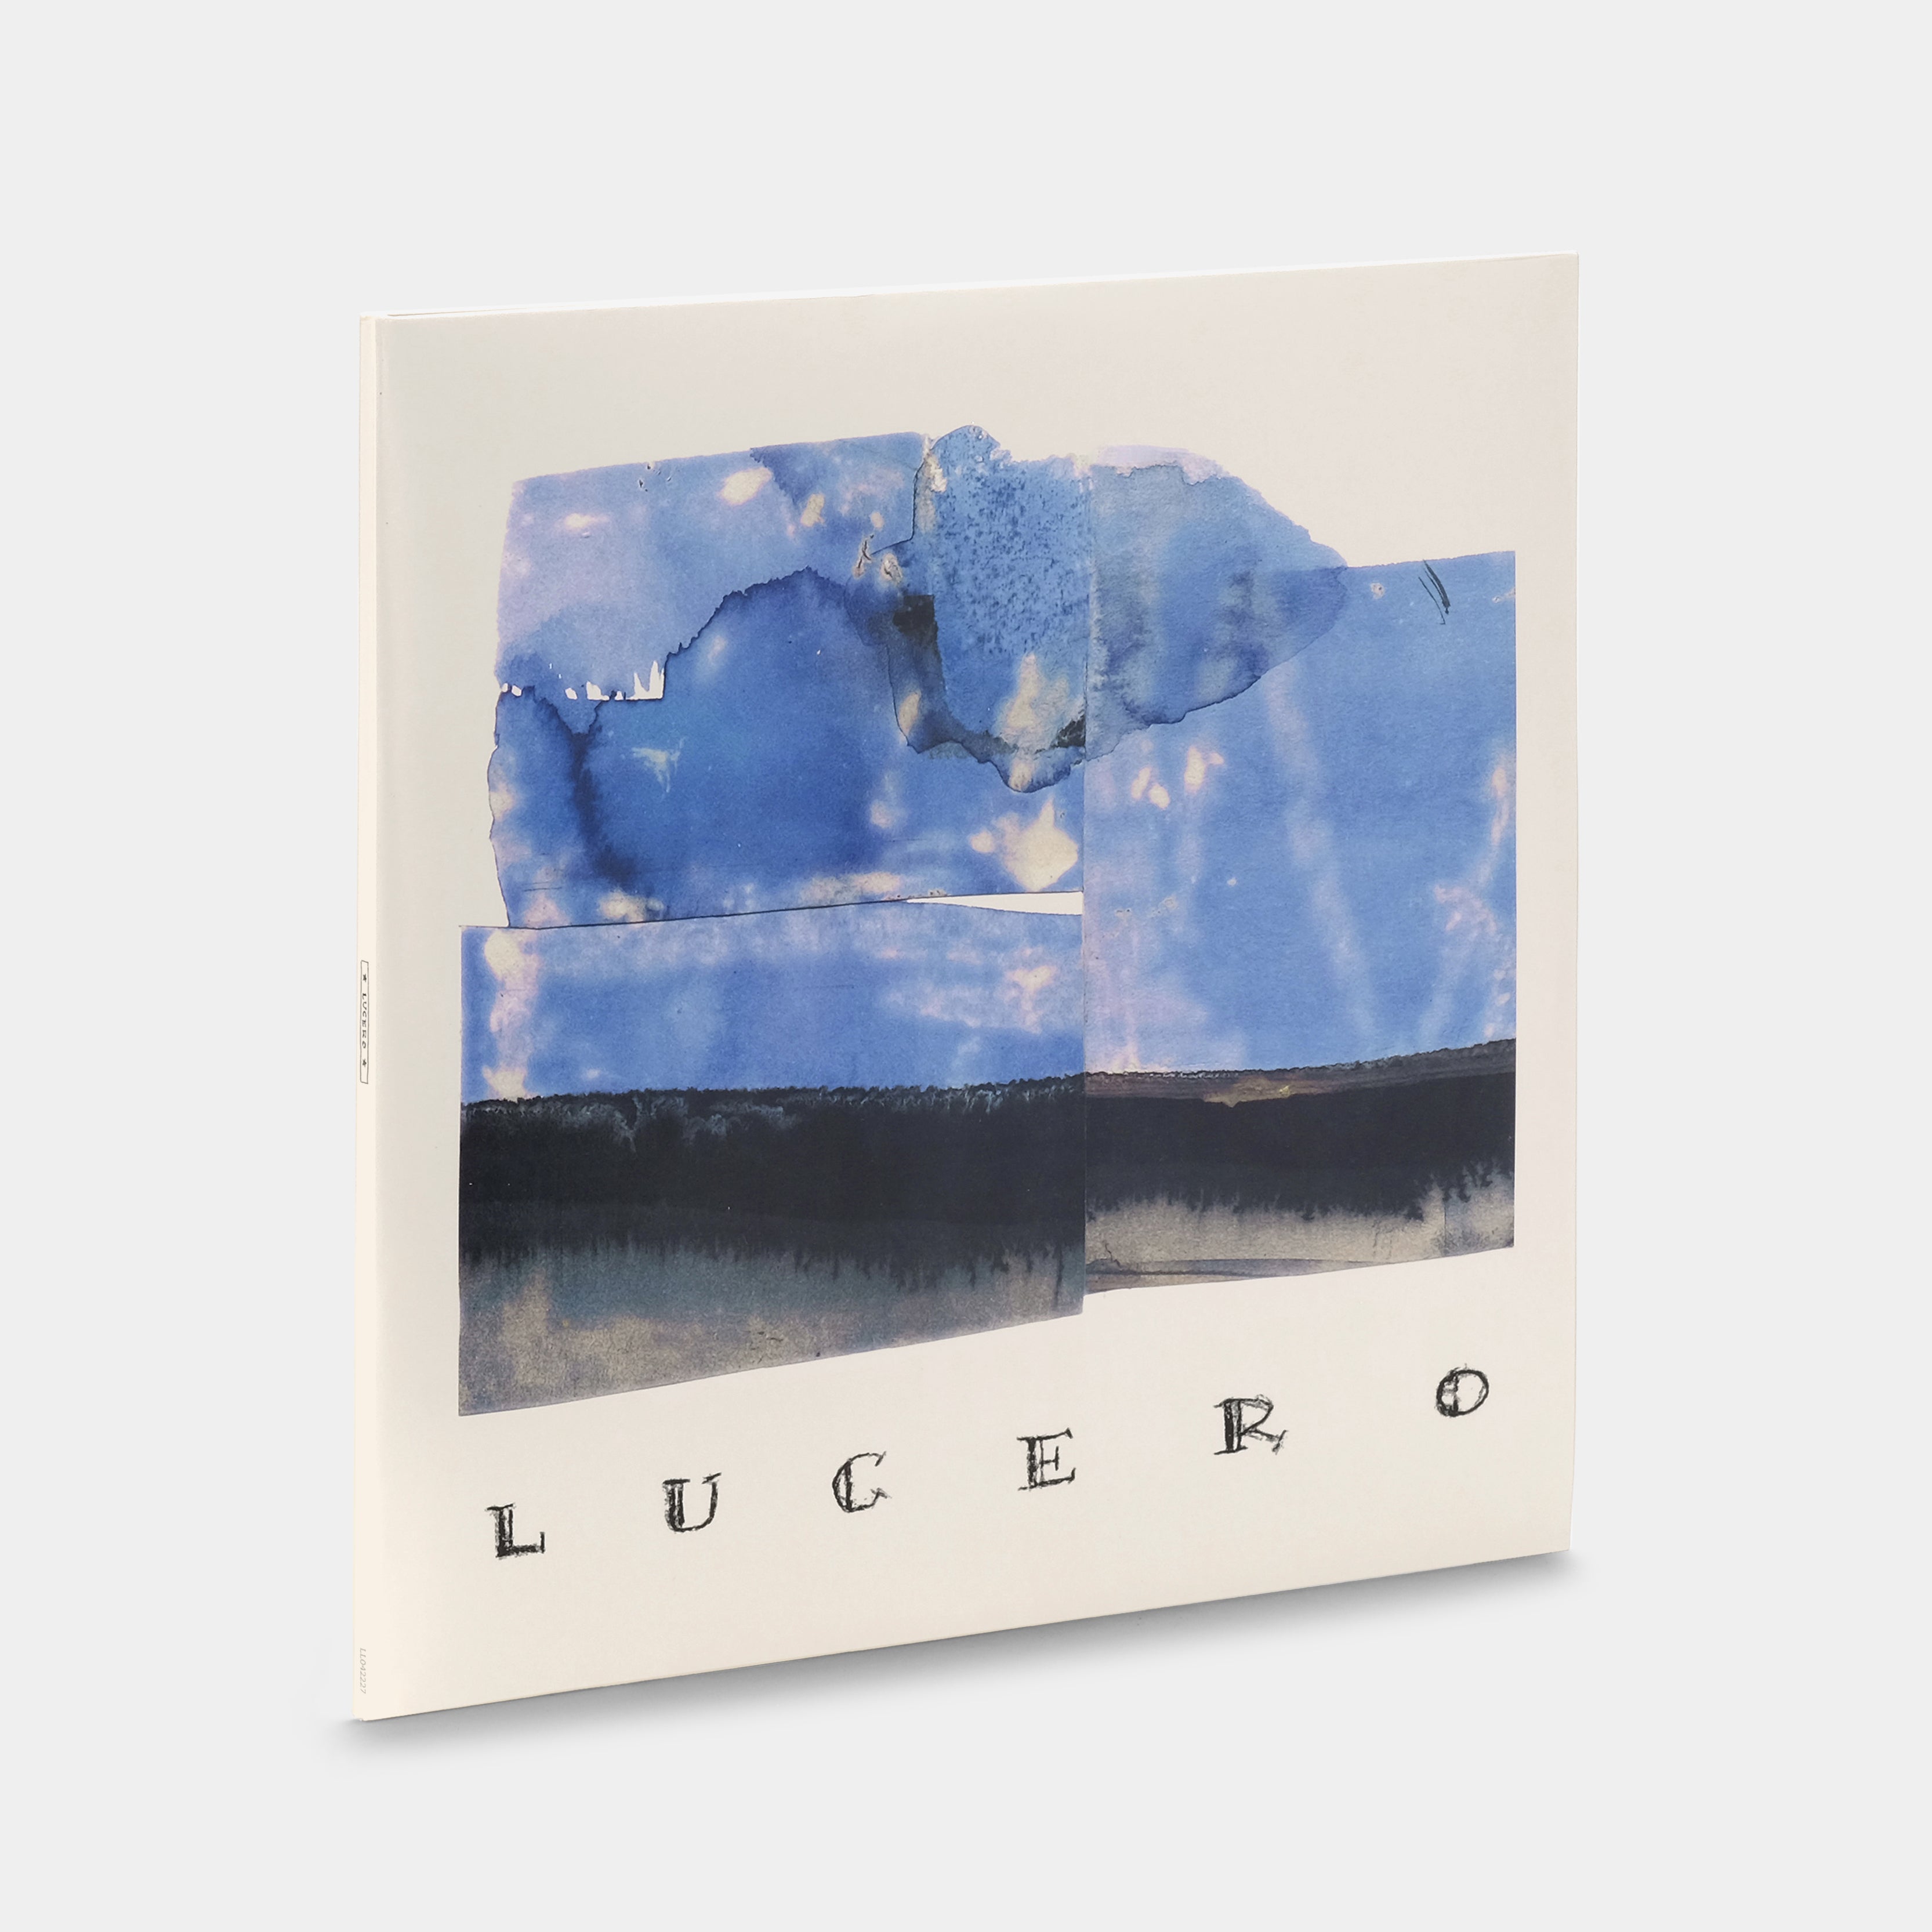 Lucero - Lucero 2xLP Vinyl Record